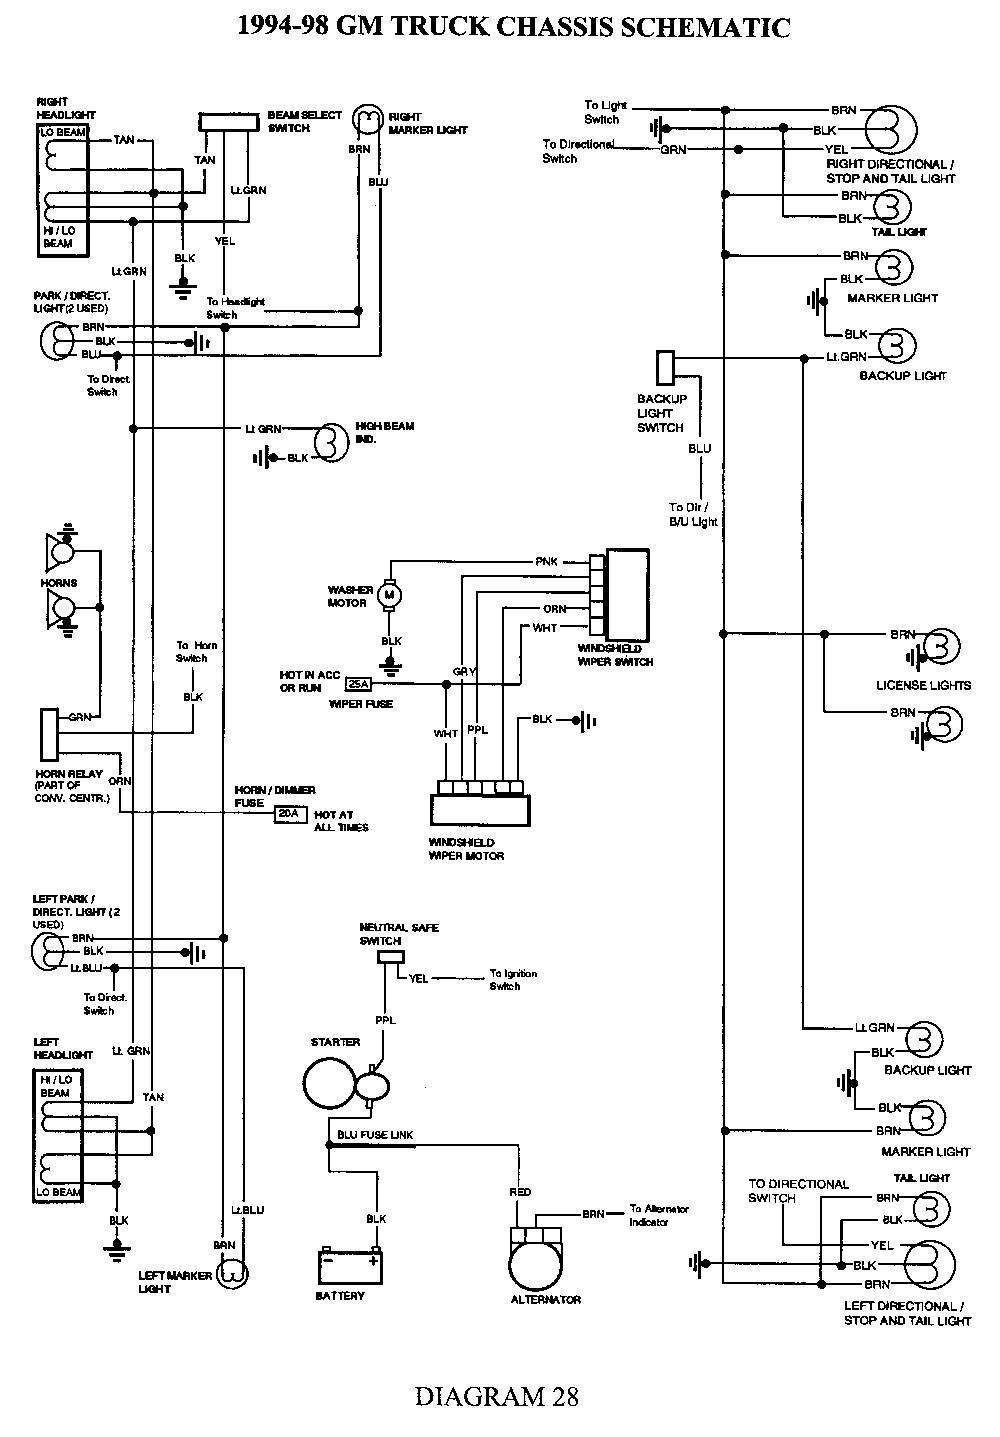 2004 Chevy Cavalier Wiring Diagram | Wiring Diagram - 2004 Chevy Cavalier Stereo Wiring Diagram